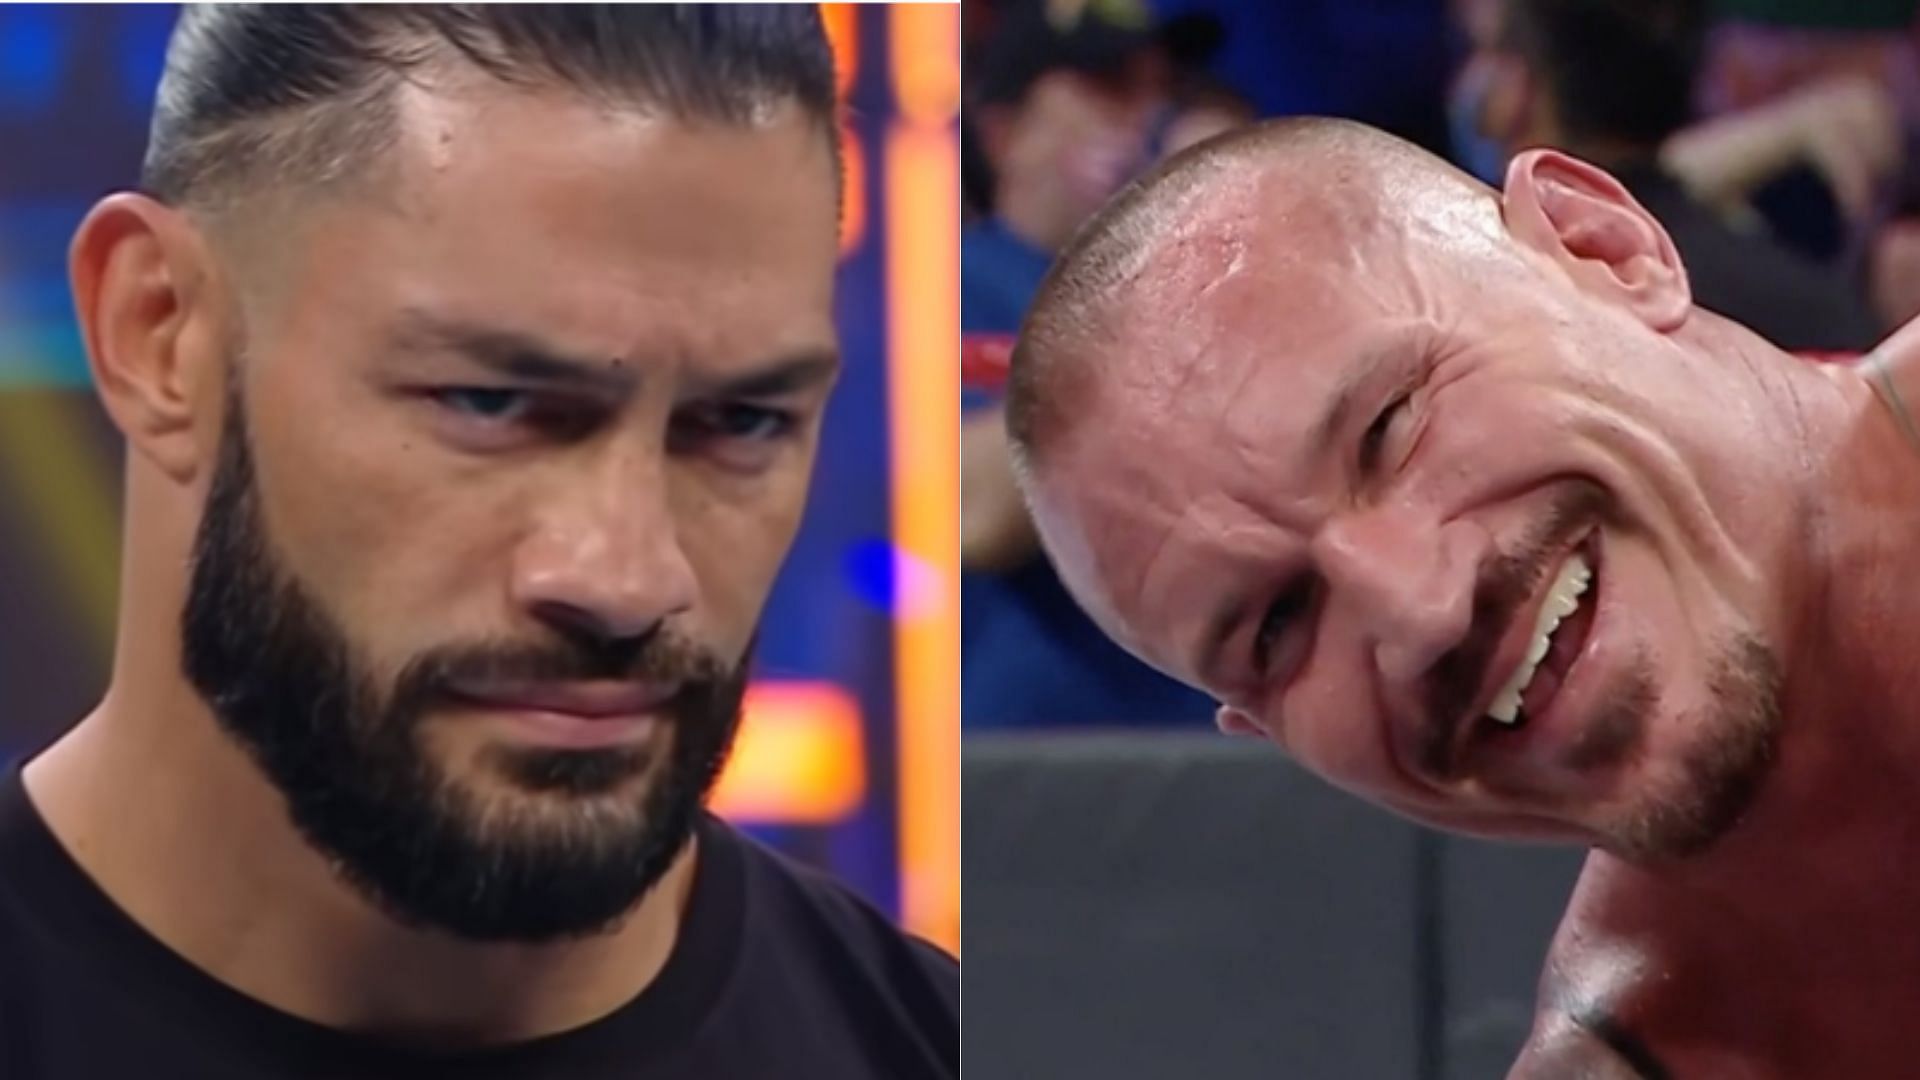 Roman Reigns (left); Randy Orton (right)